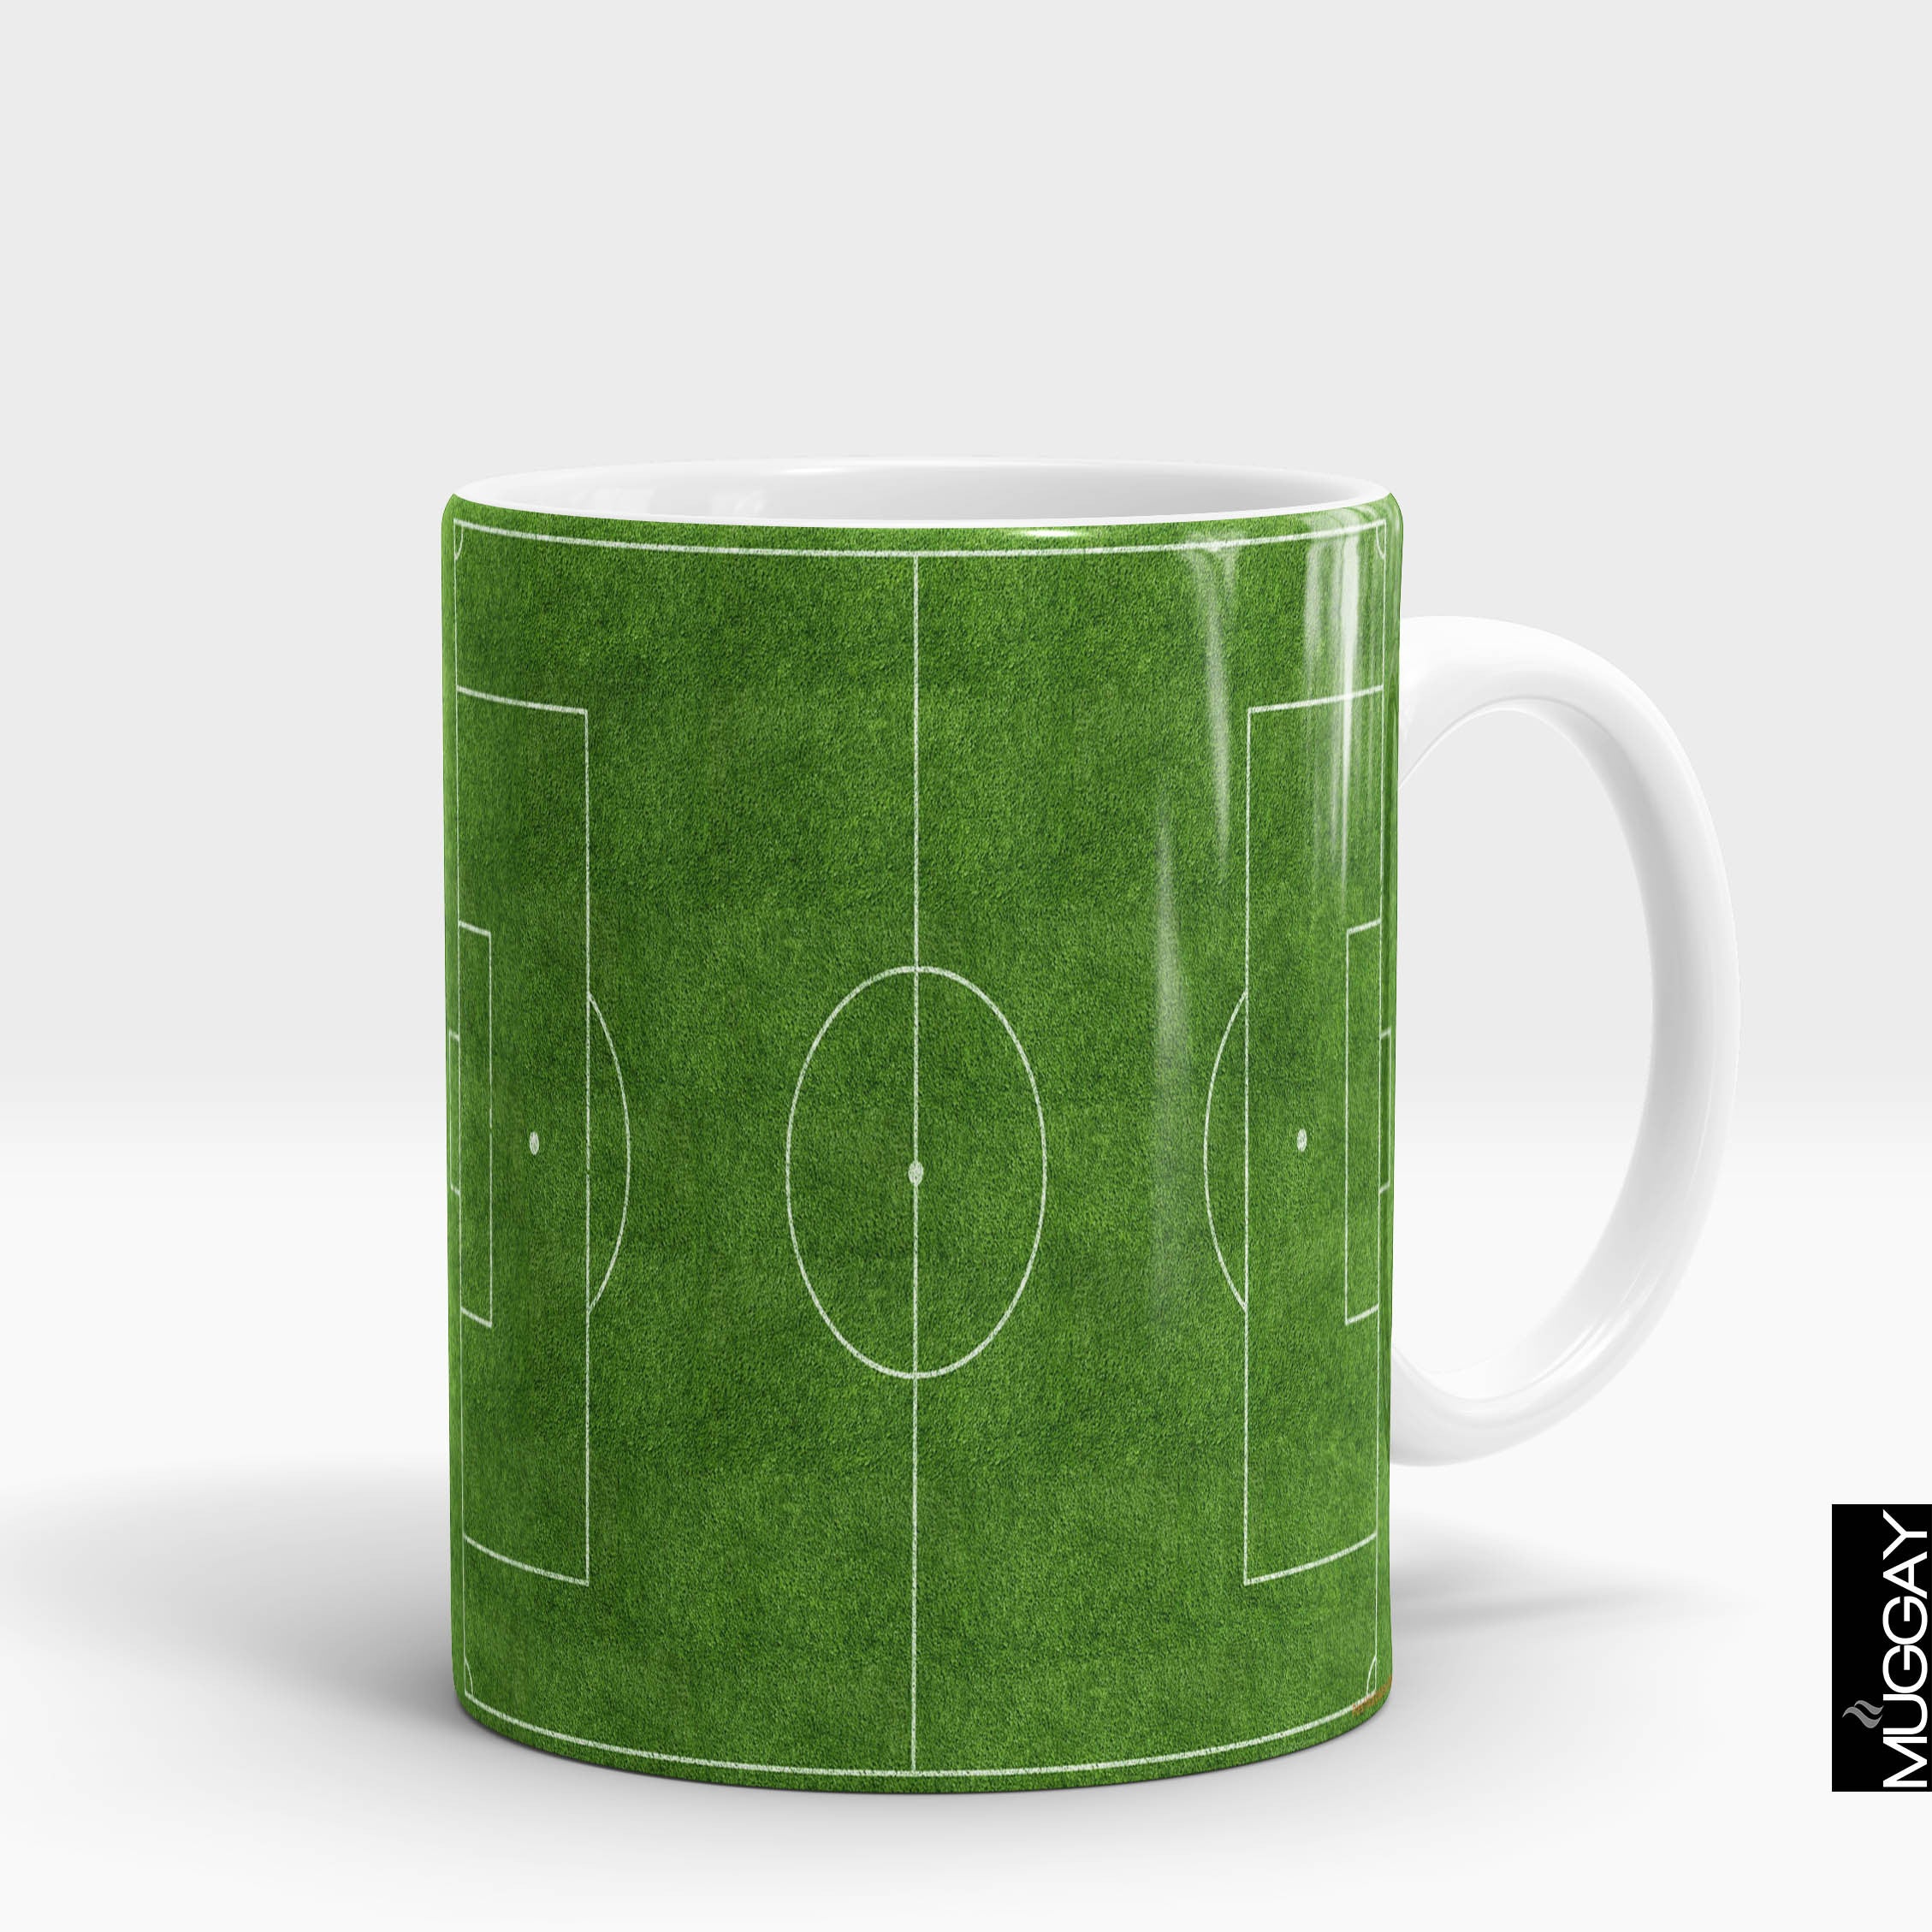 Football Theme mugs58